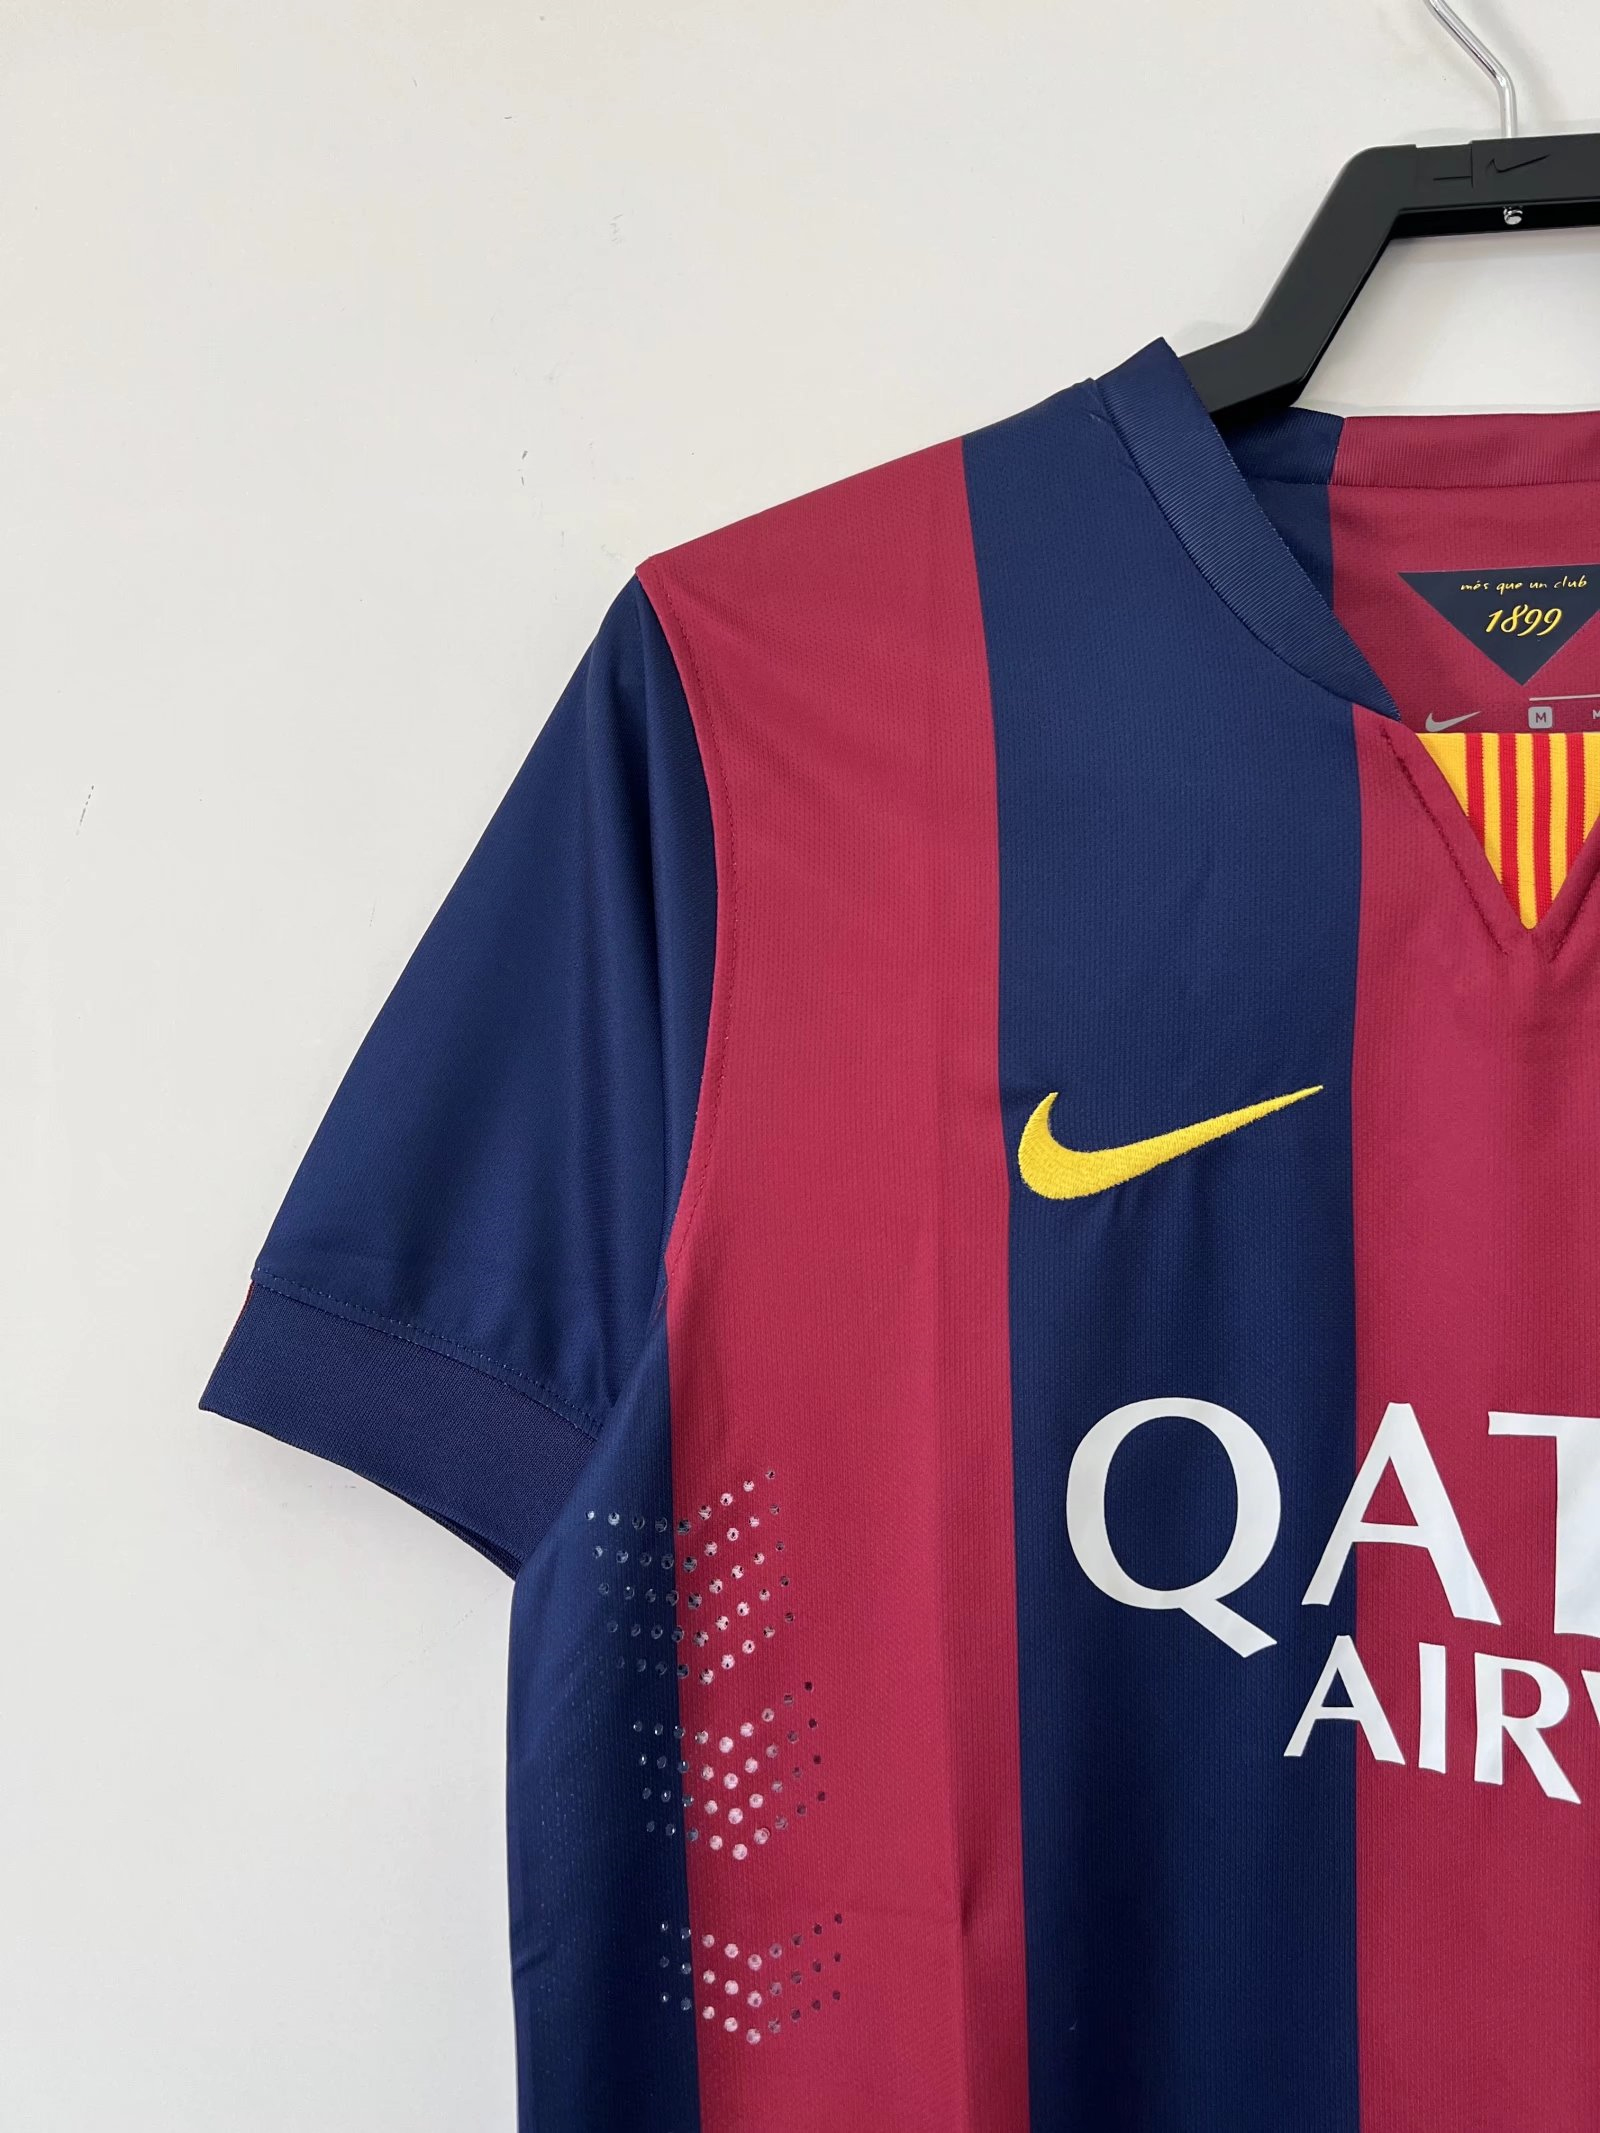 Barcelona Soccer Jersey Replica Retro Home Mens 2014/15